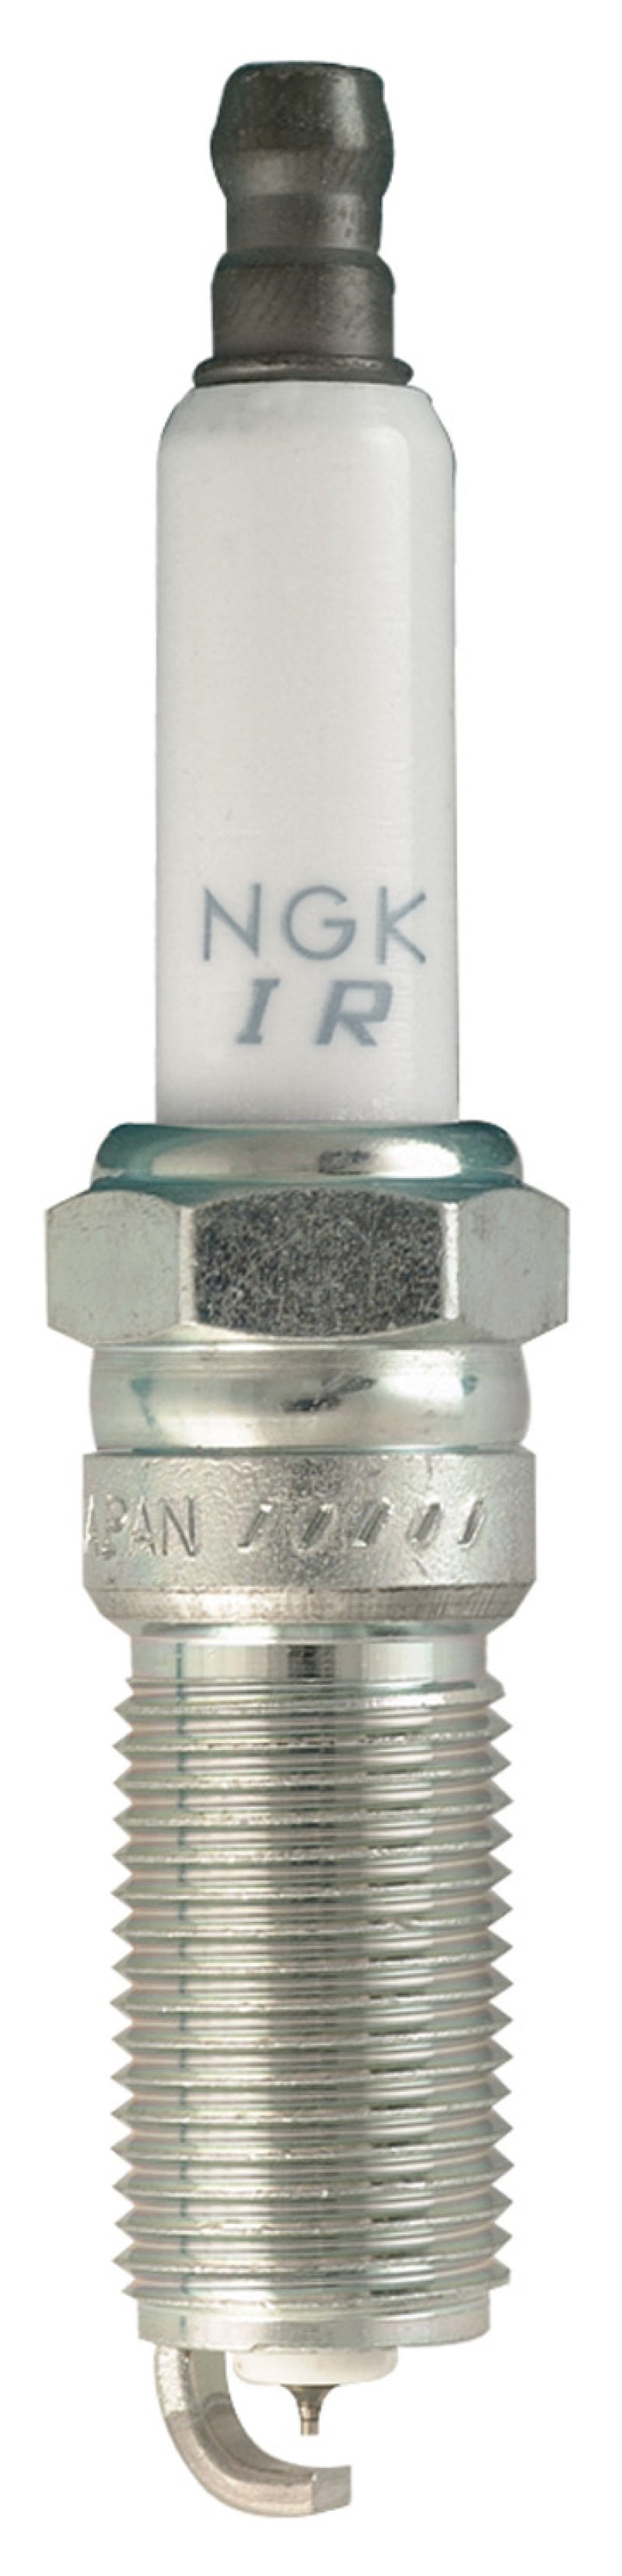 NGK Iridium/Platinum Spark Plug Box of 4 (ILTR5E11)